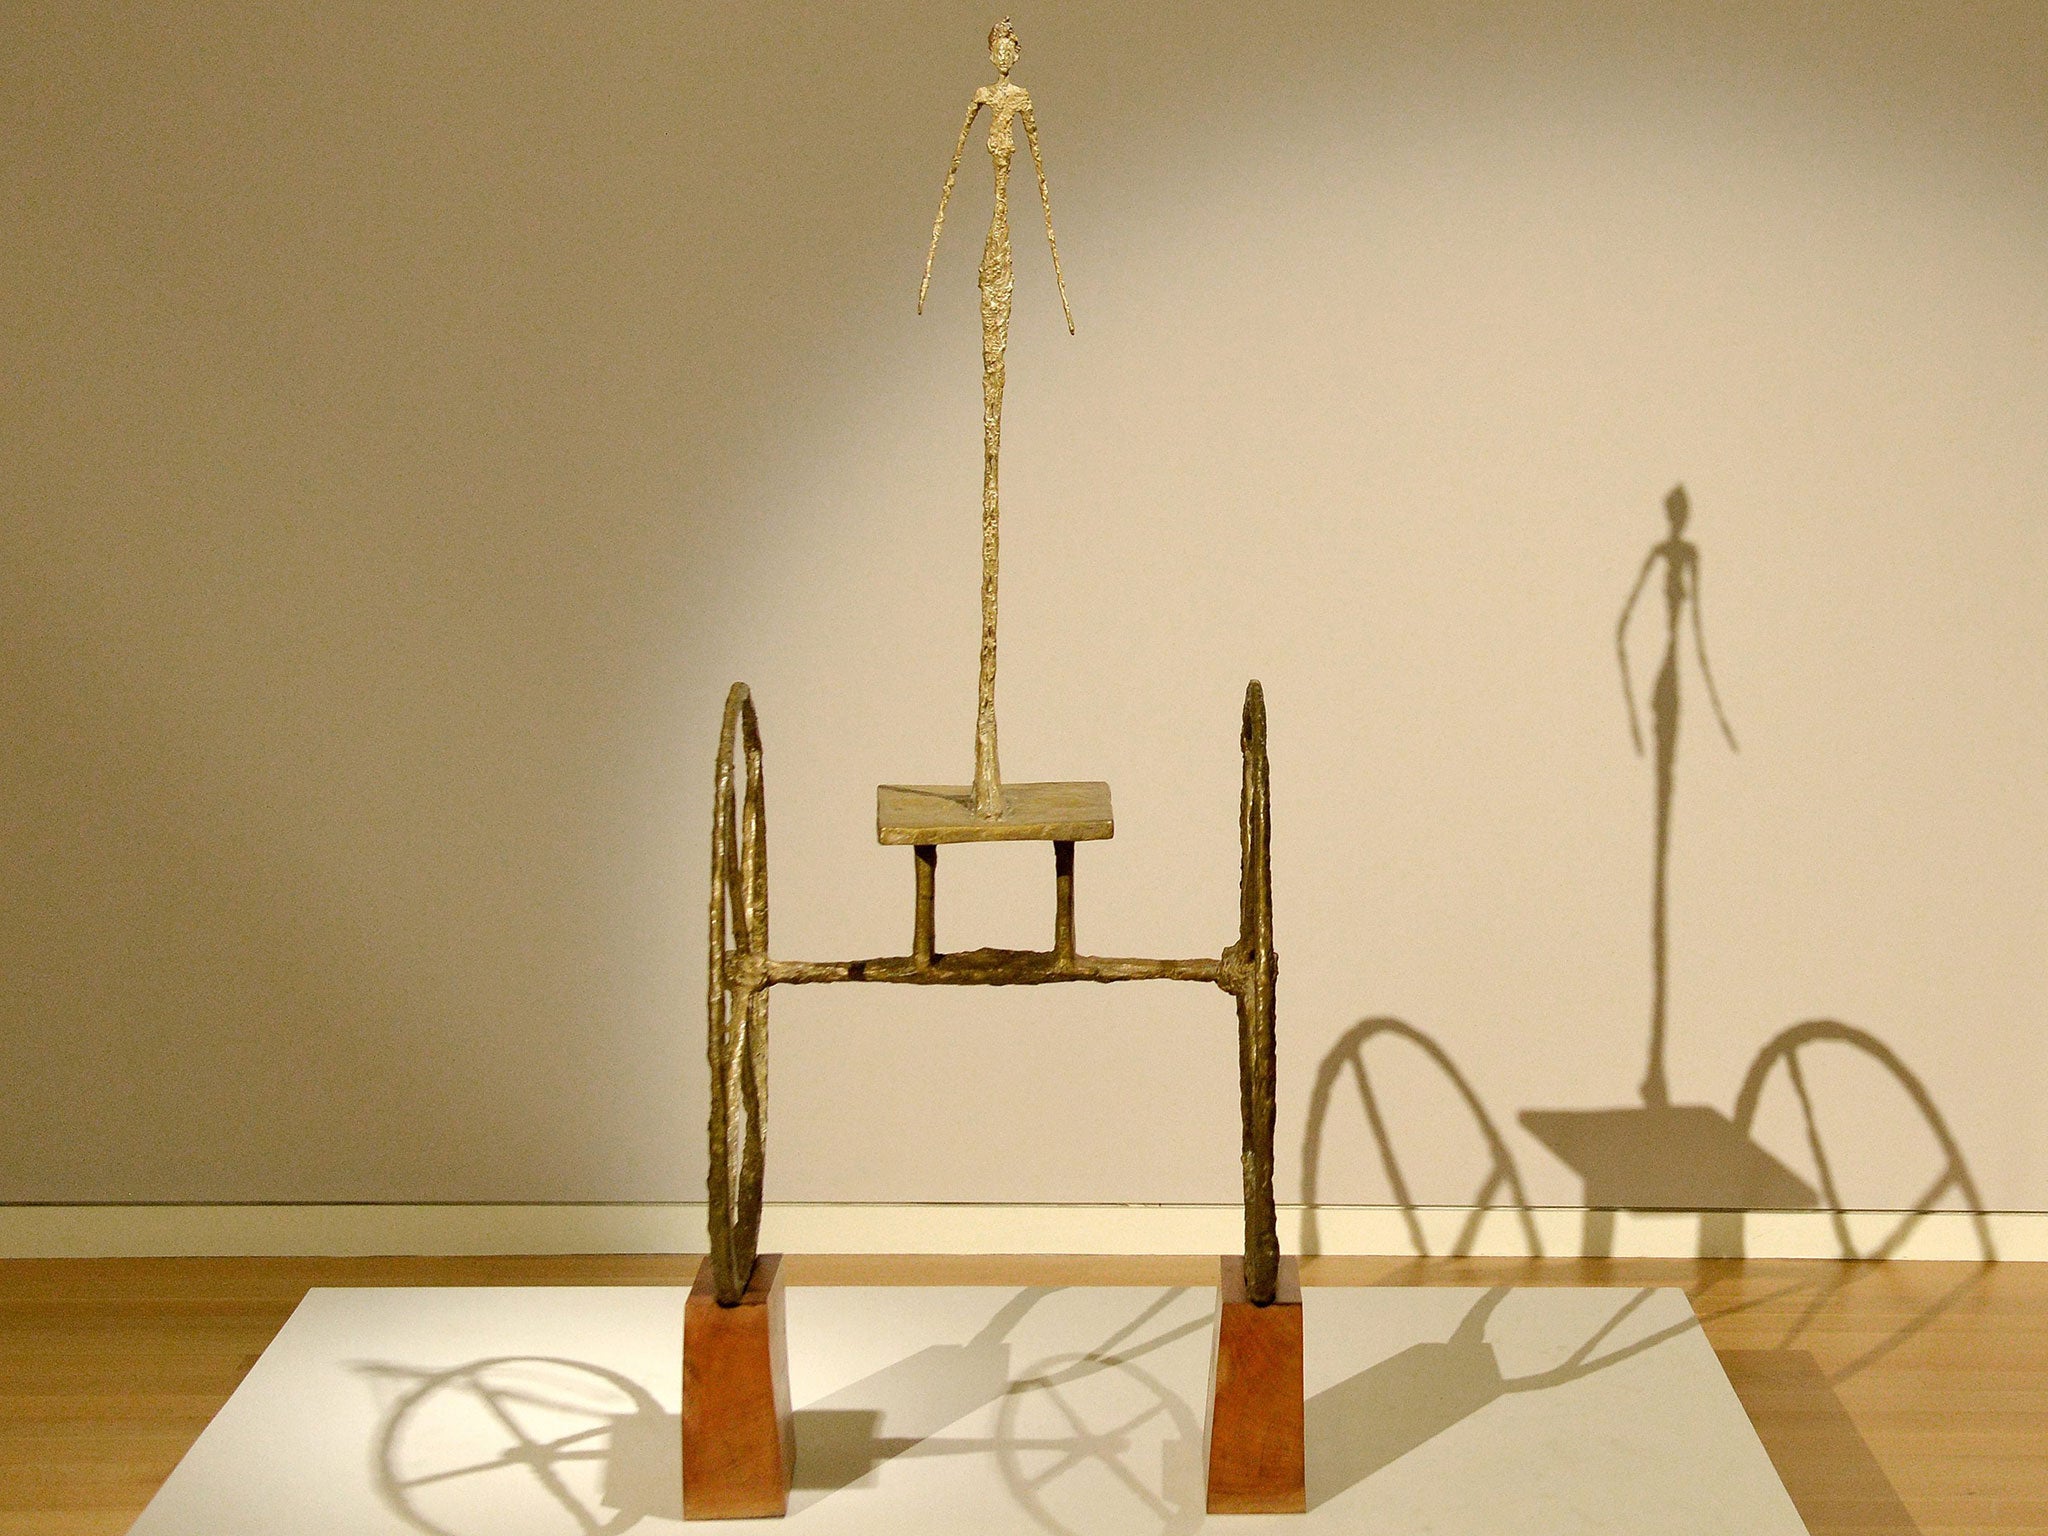 'Chariot' by Swiss artist Alberto Giacometti